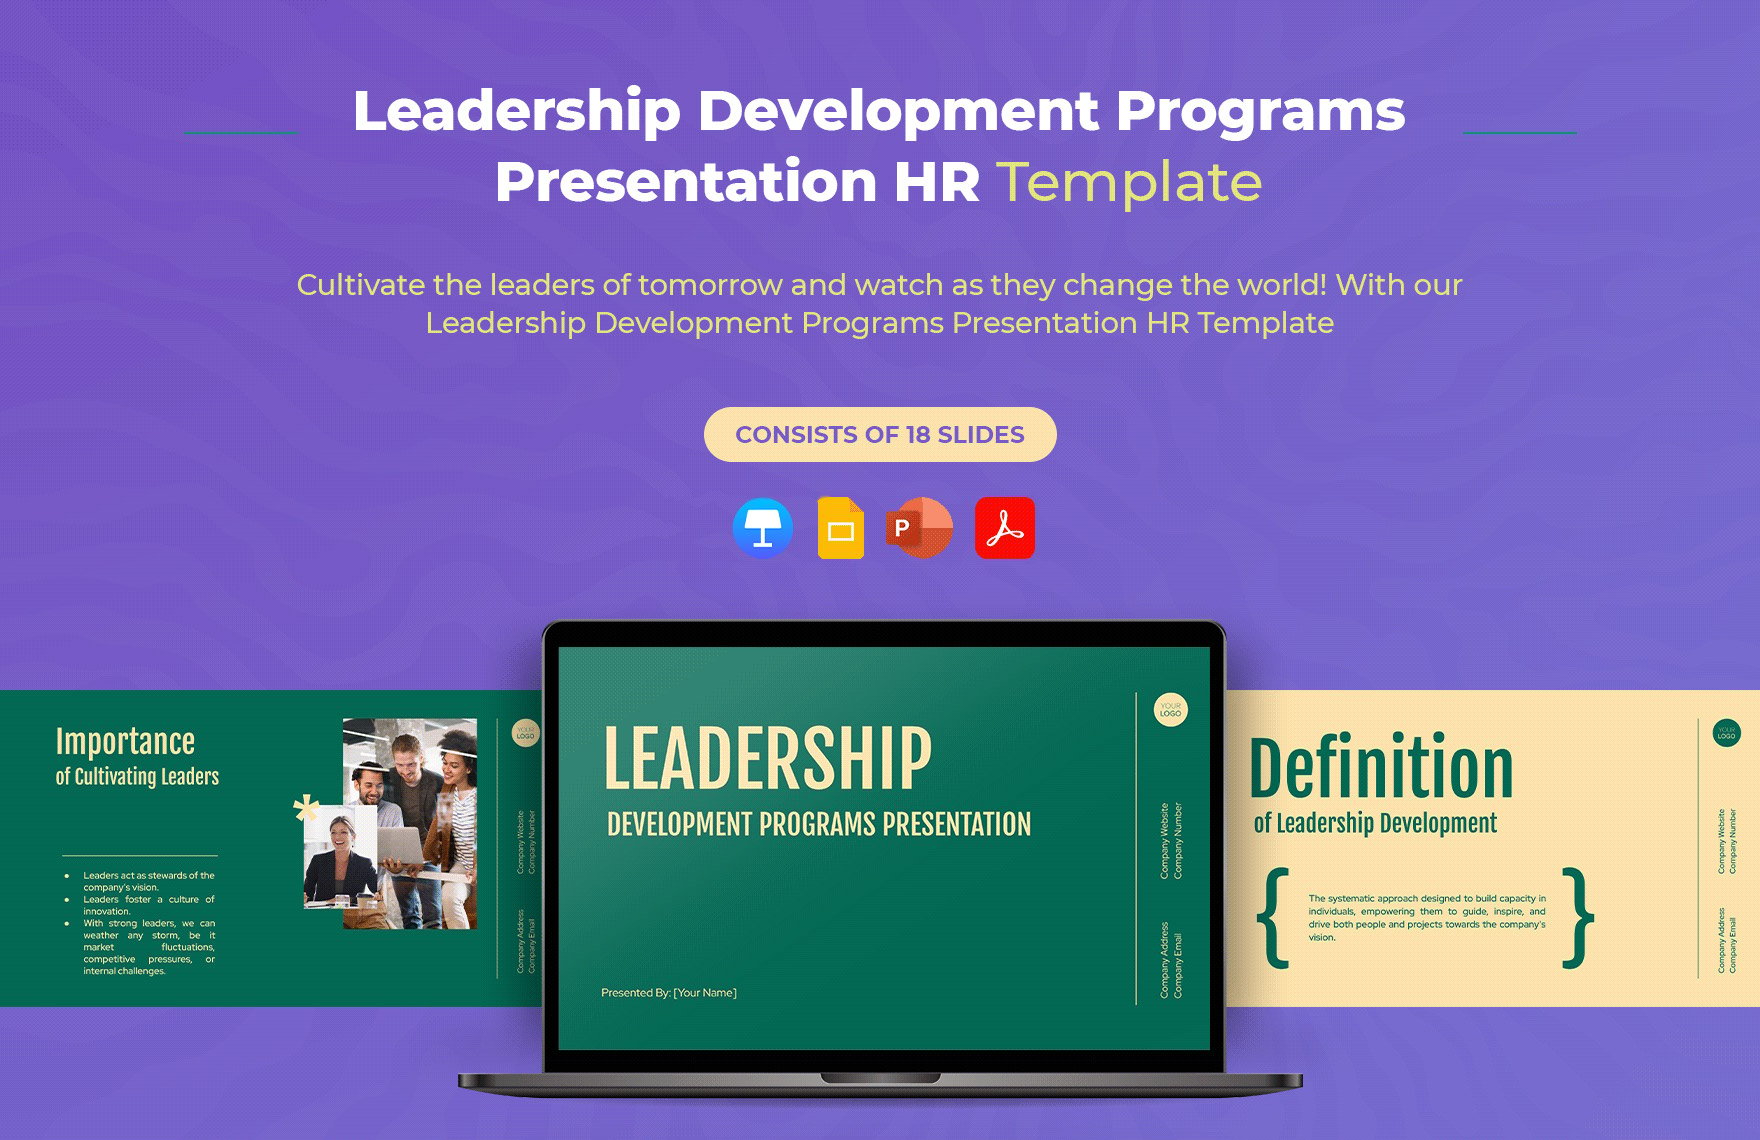 Leadership Development Programs Presentation HR Template in PDF, PowerPoint, Google Slides, Apple Keynote